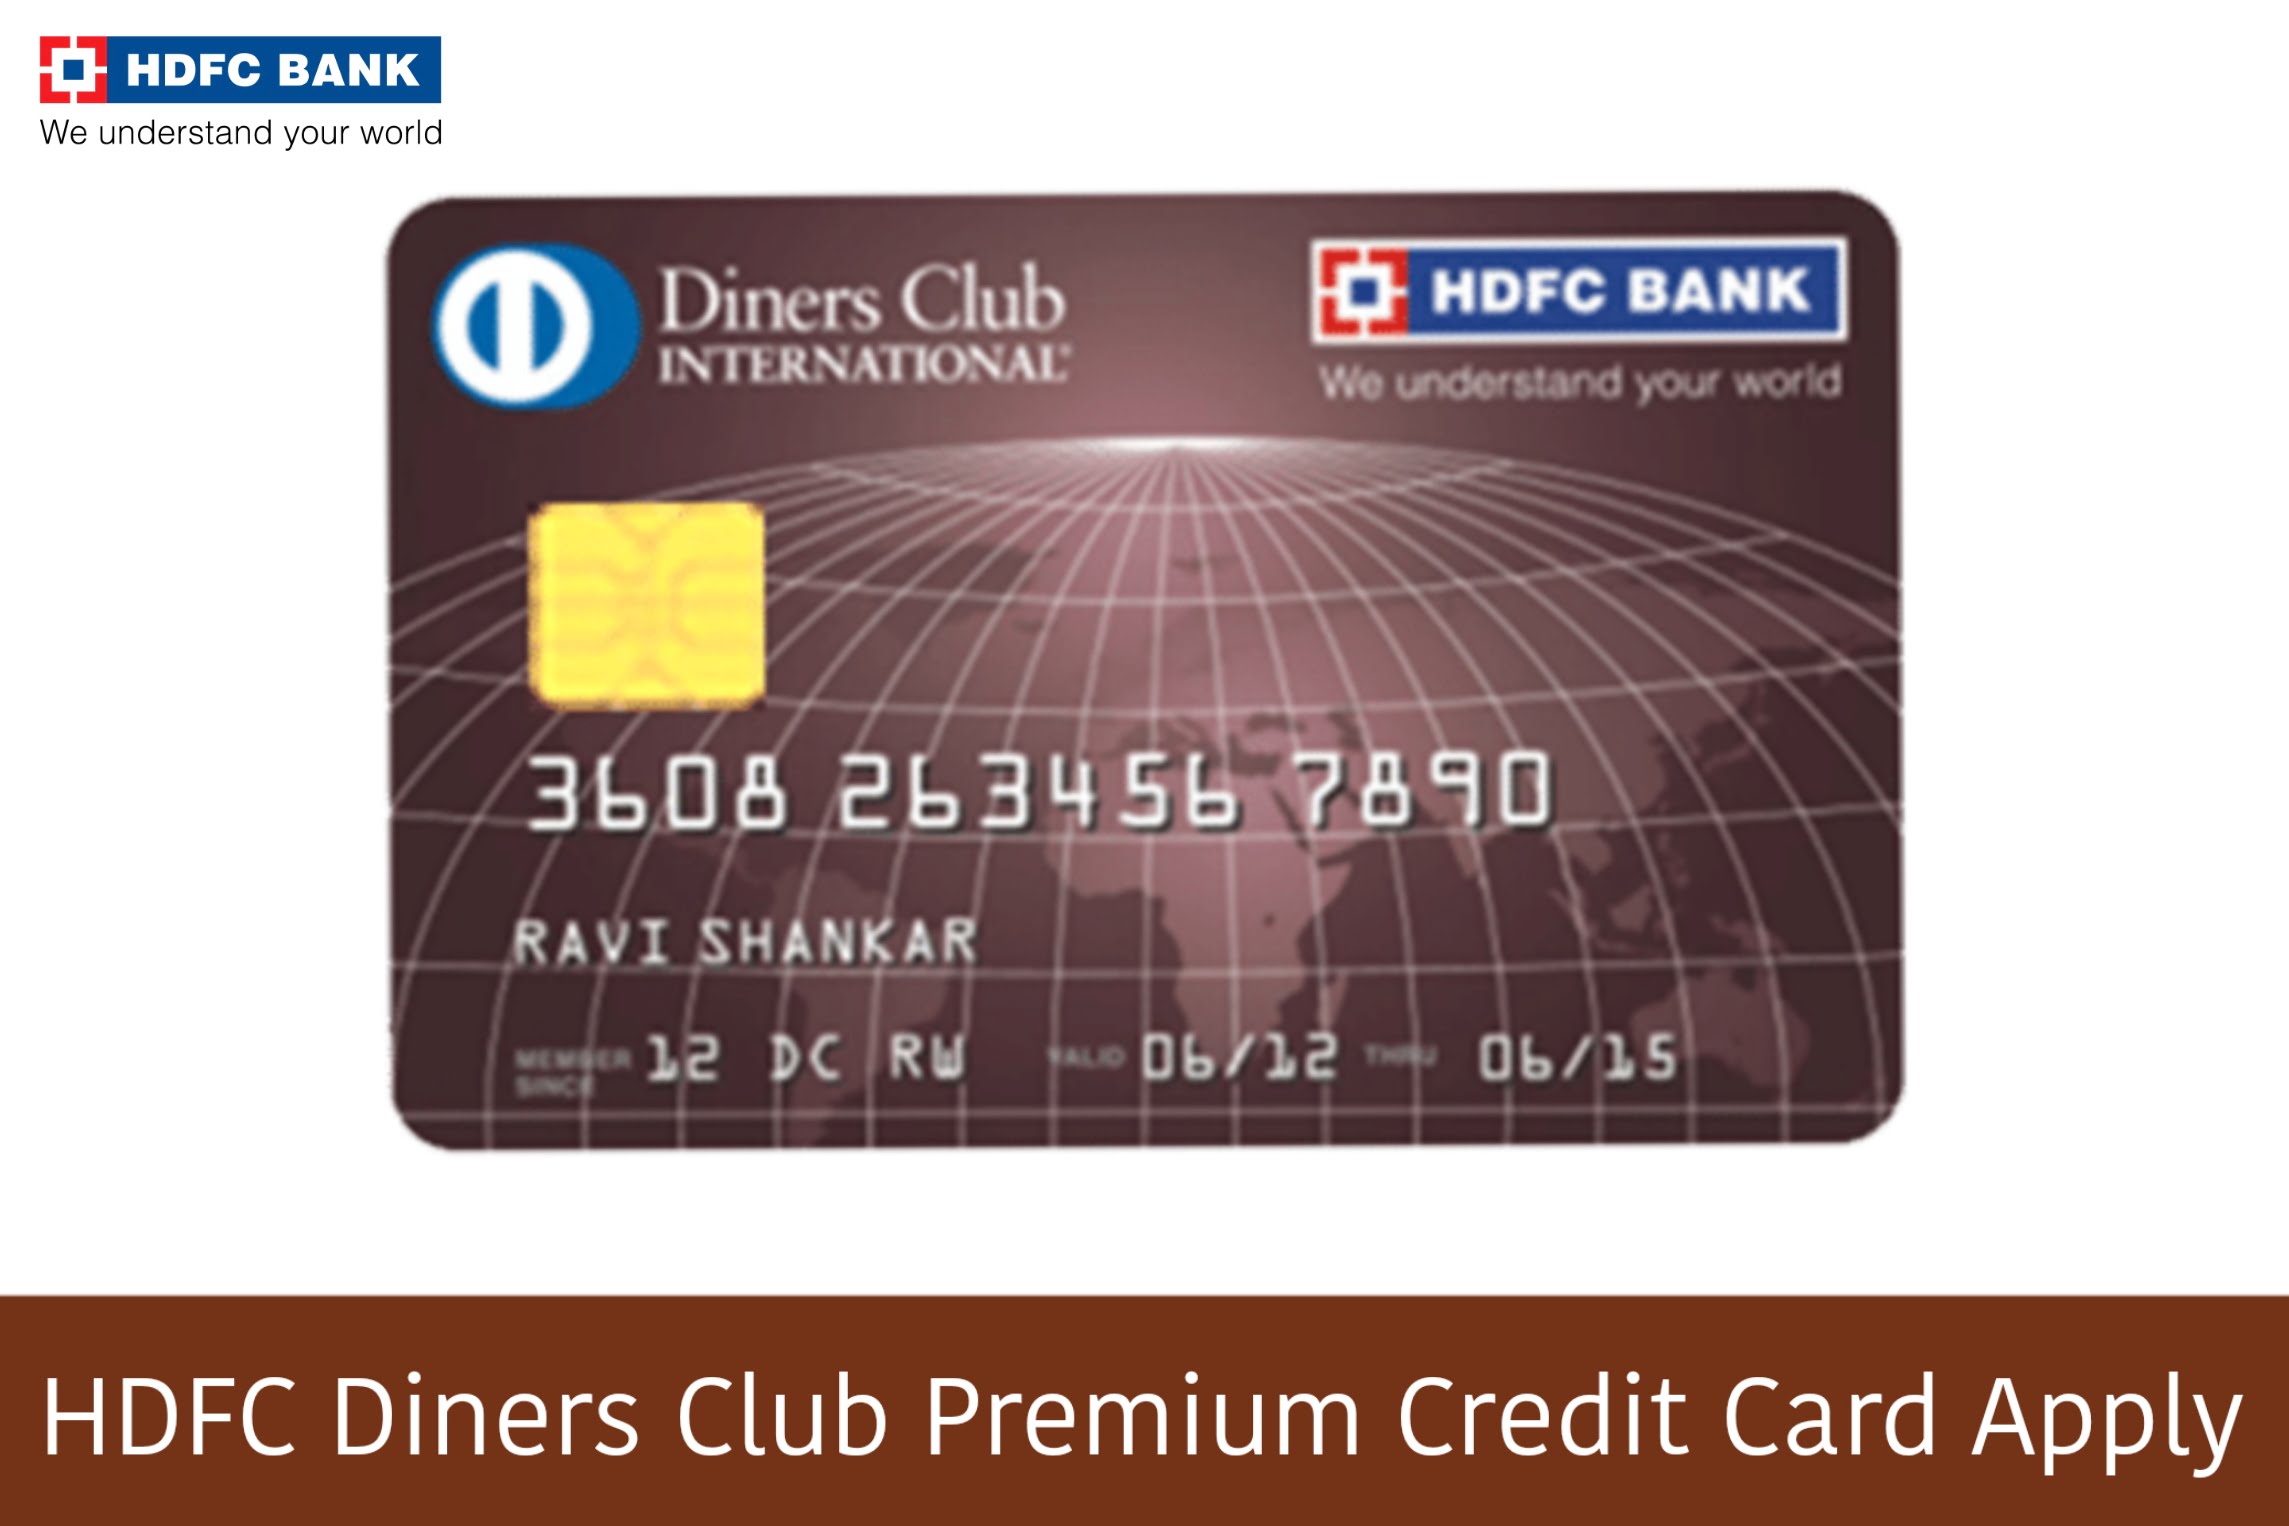 HDFC Diners Club Premium Credit Card